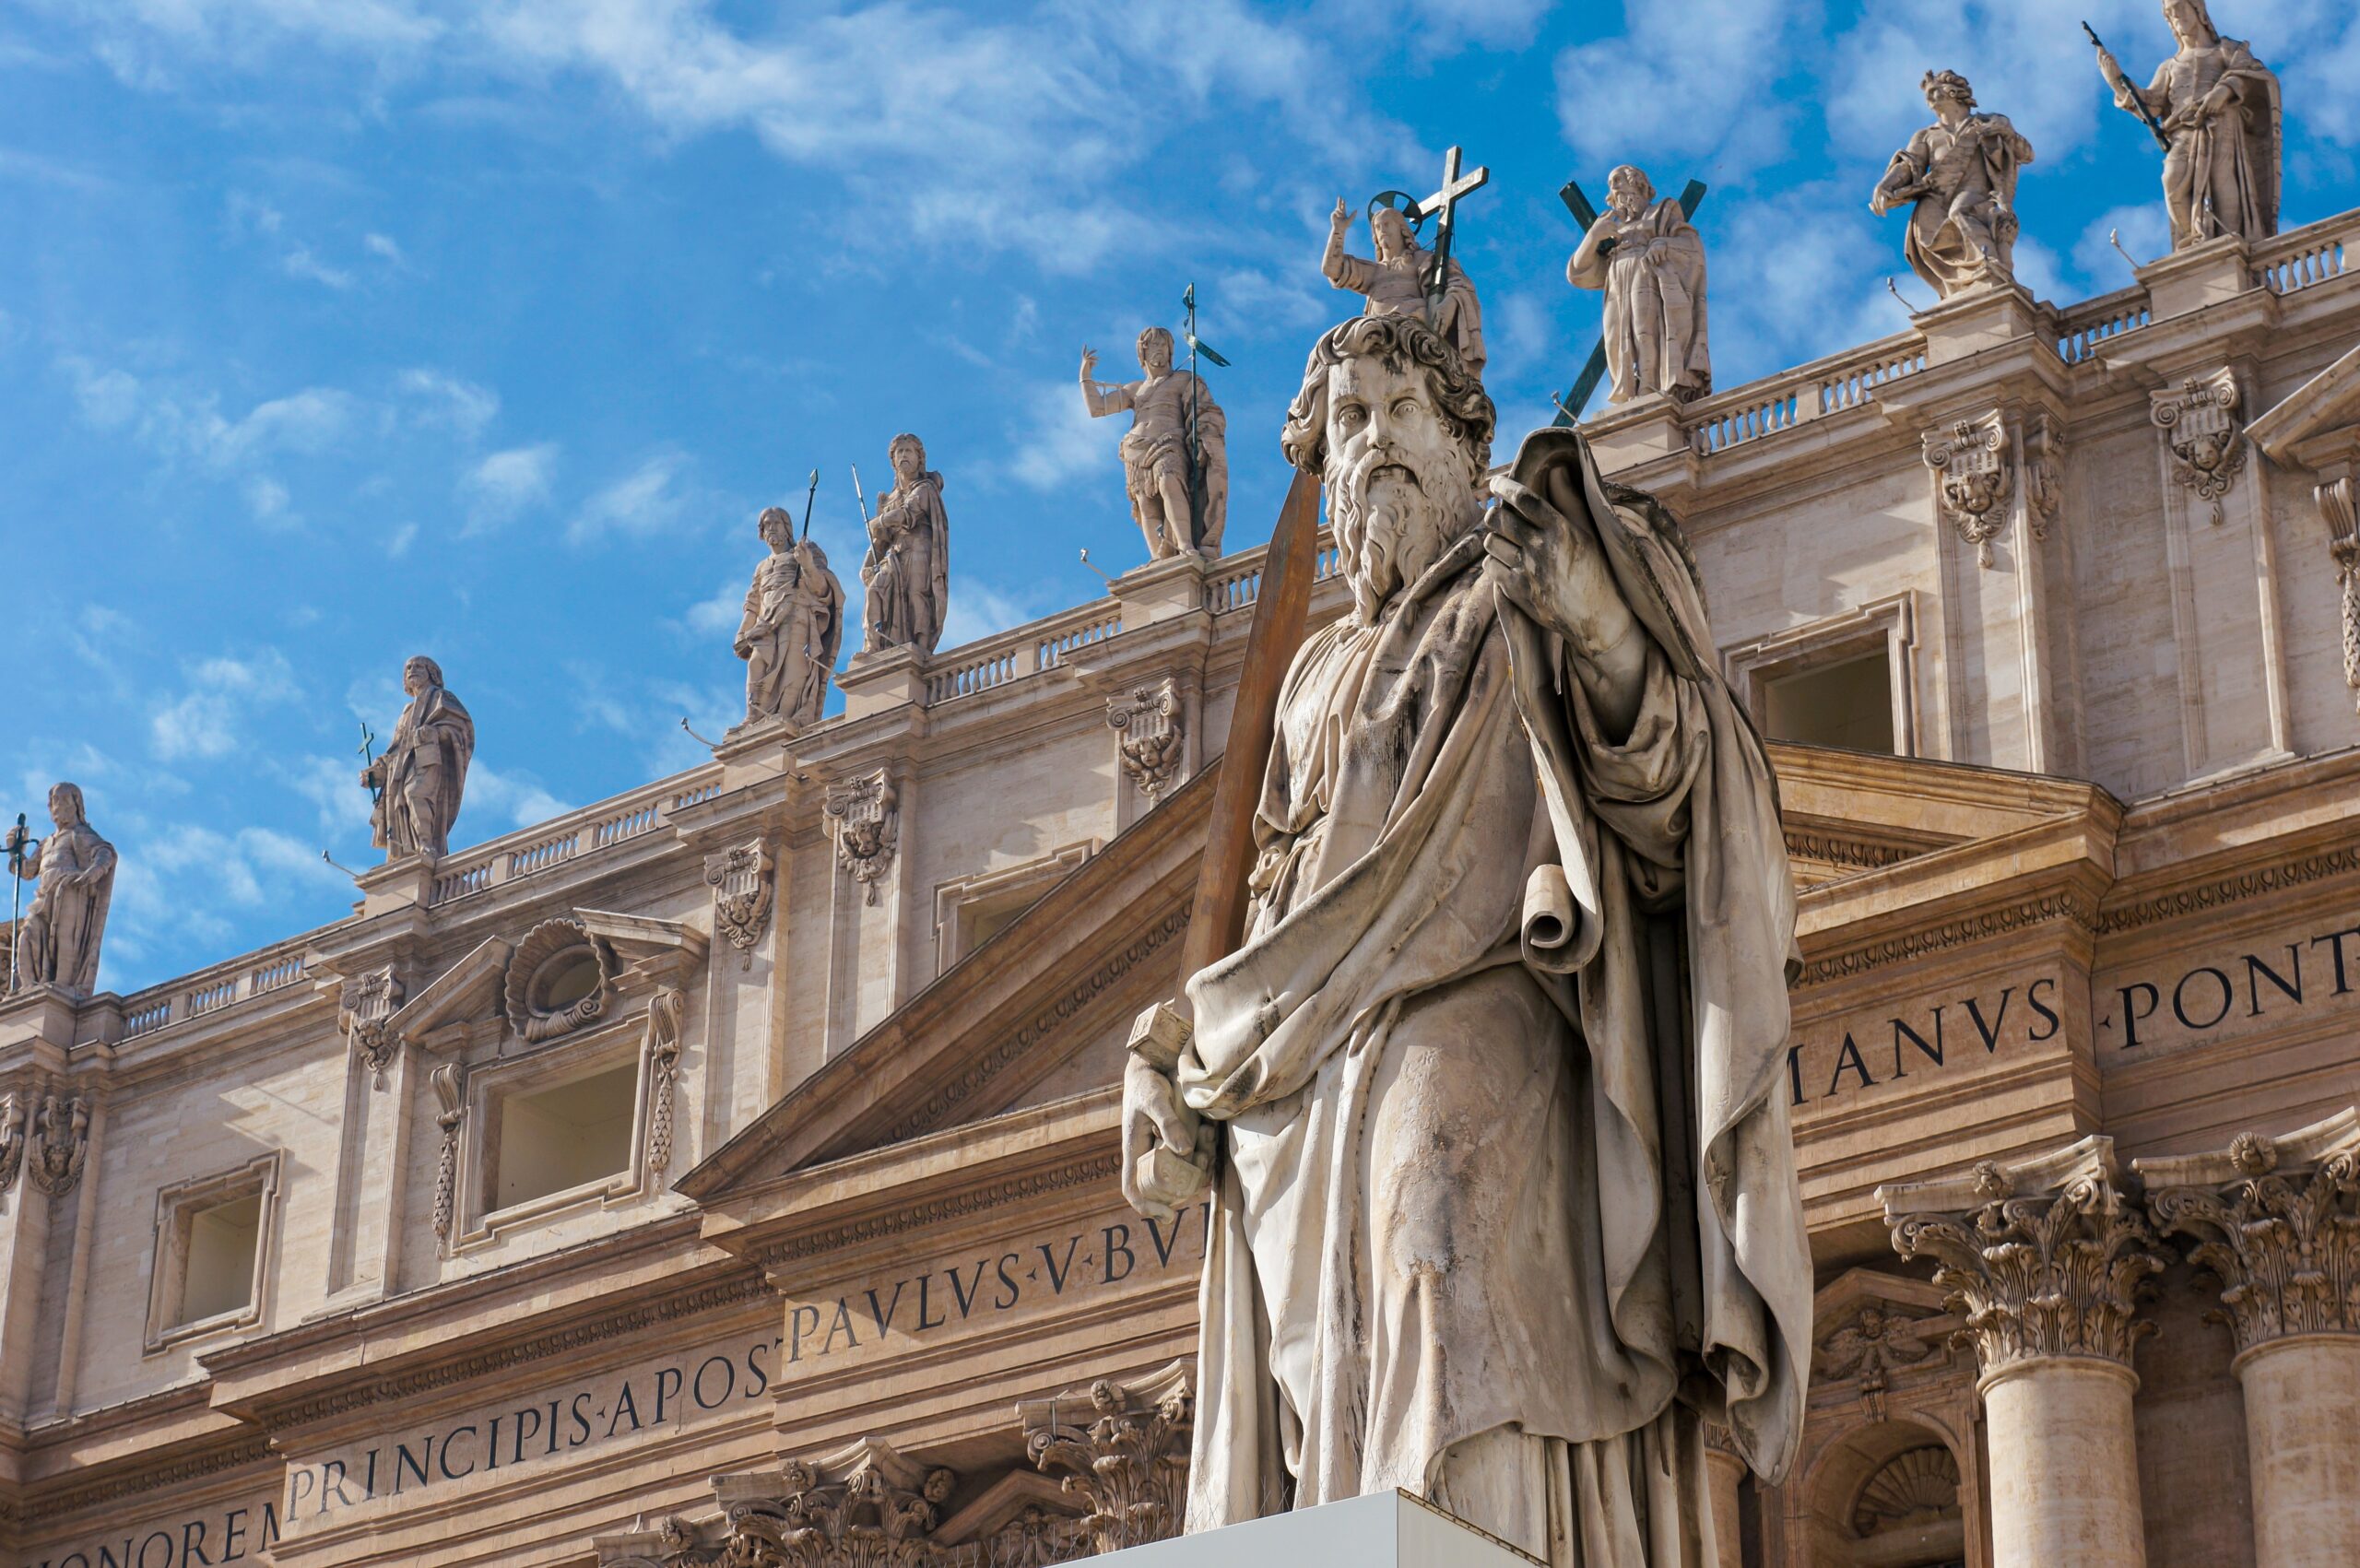 Statue des Apostels Paulus vor der Petersbasilika im Vatikan.